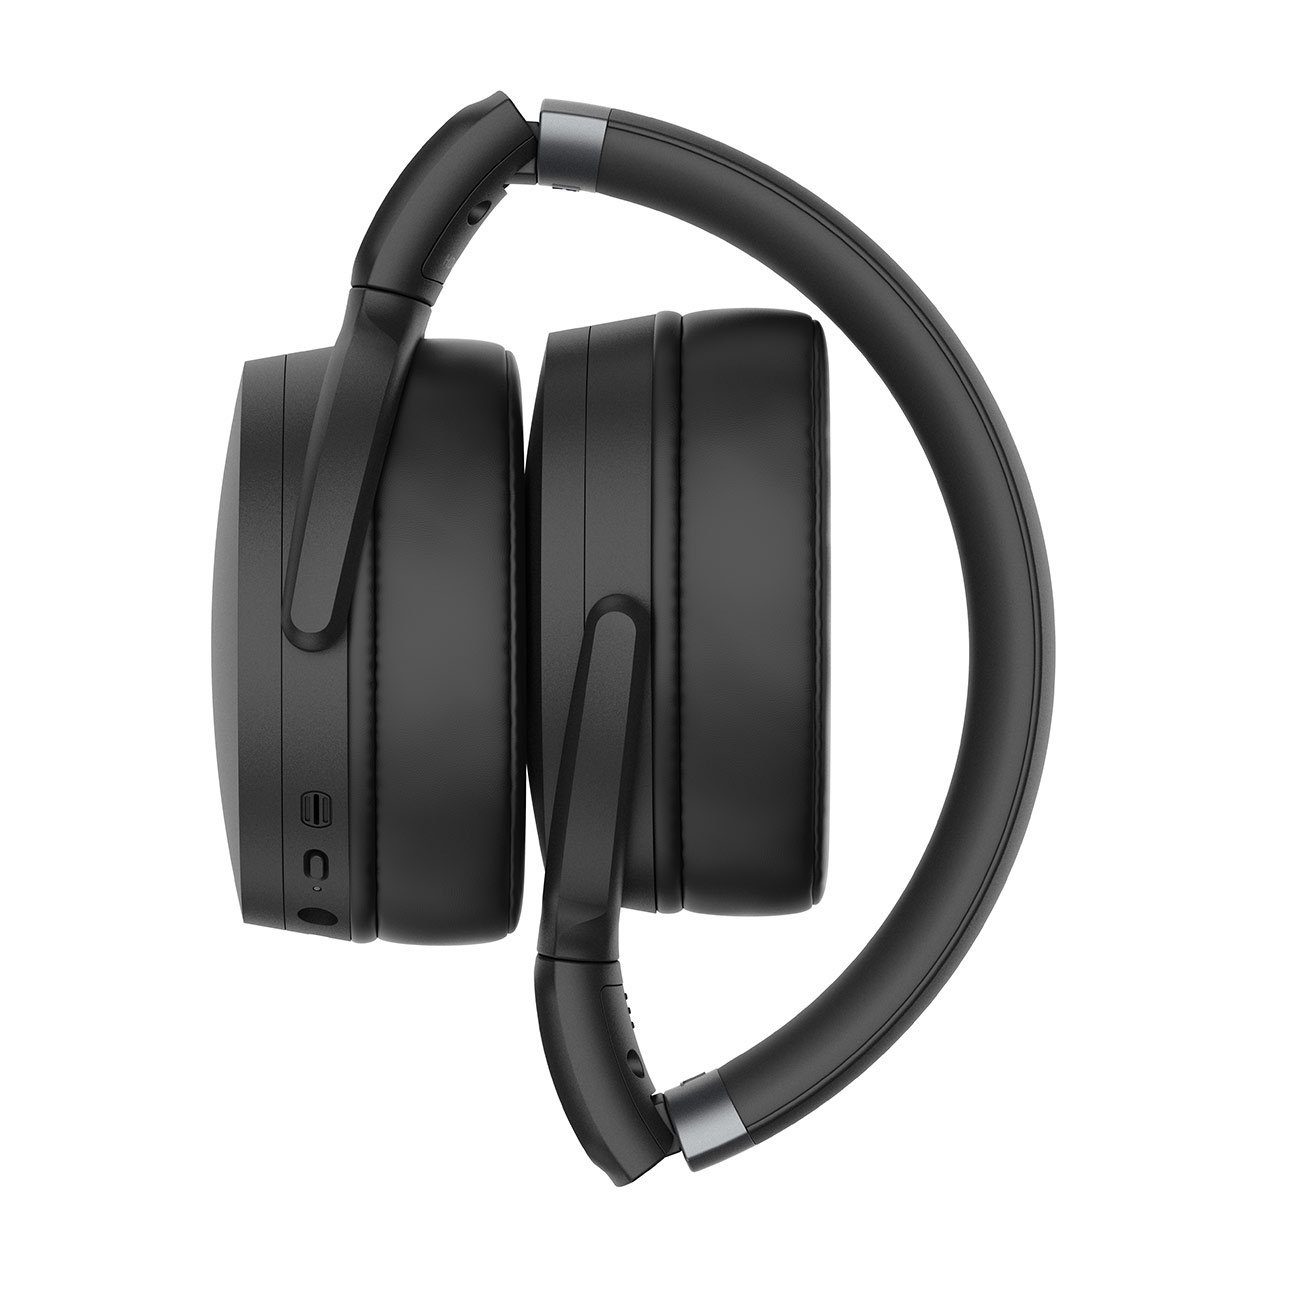 Schwarz 450BT Cancellation, Bluetooth) HD Sennheiser Noise Over-Ear-Kopfhörer (Active